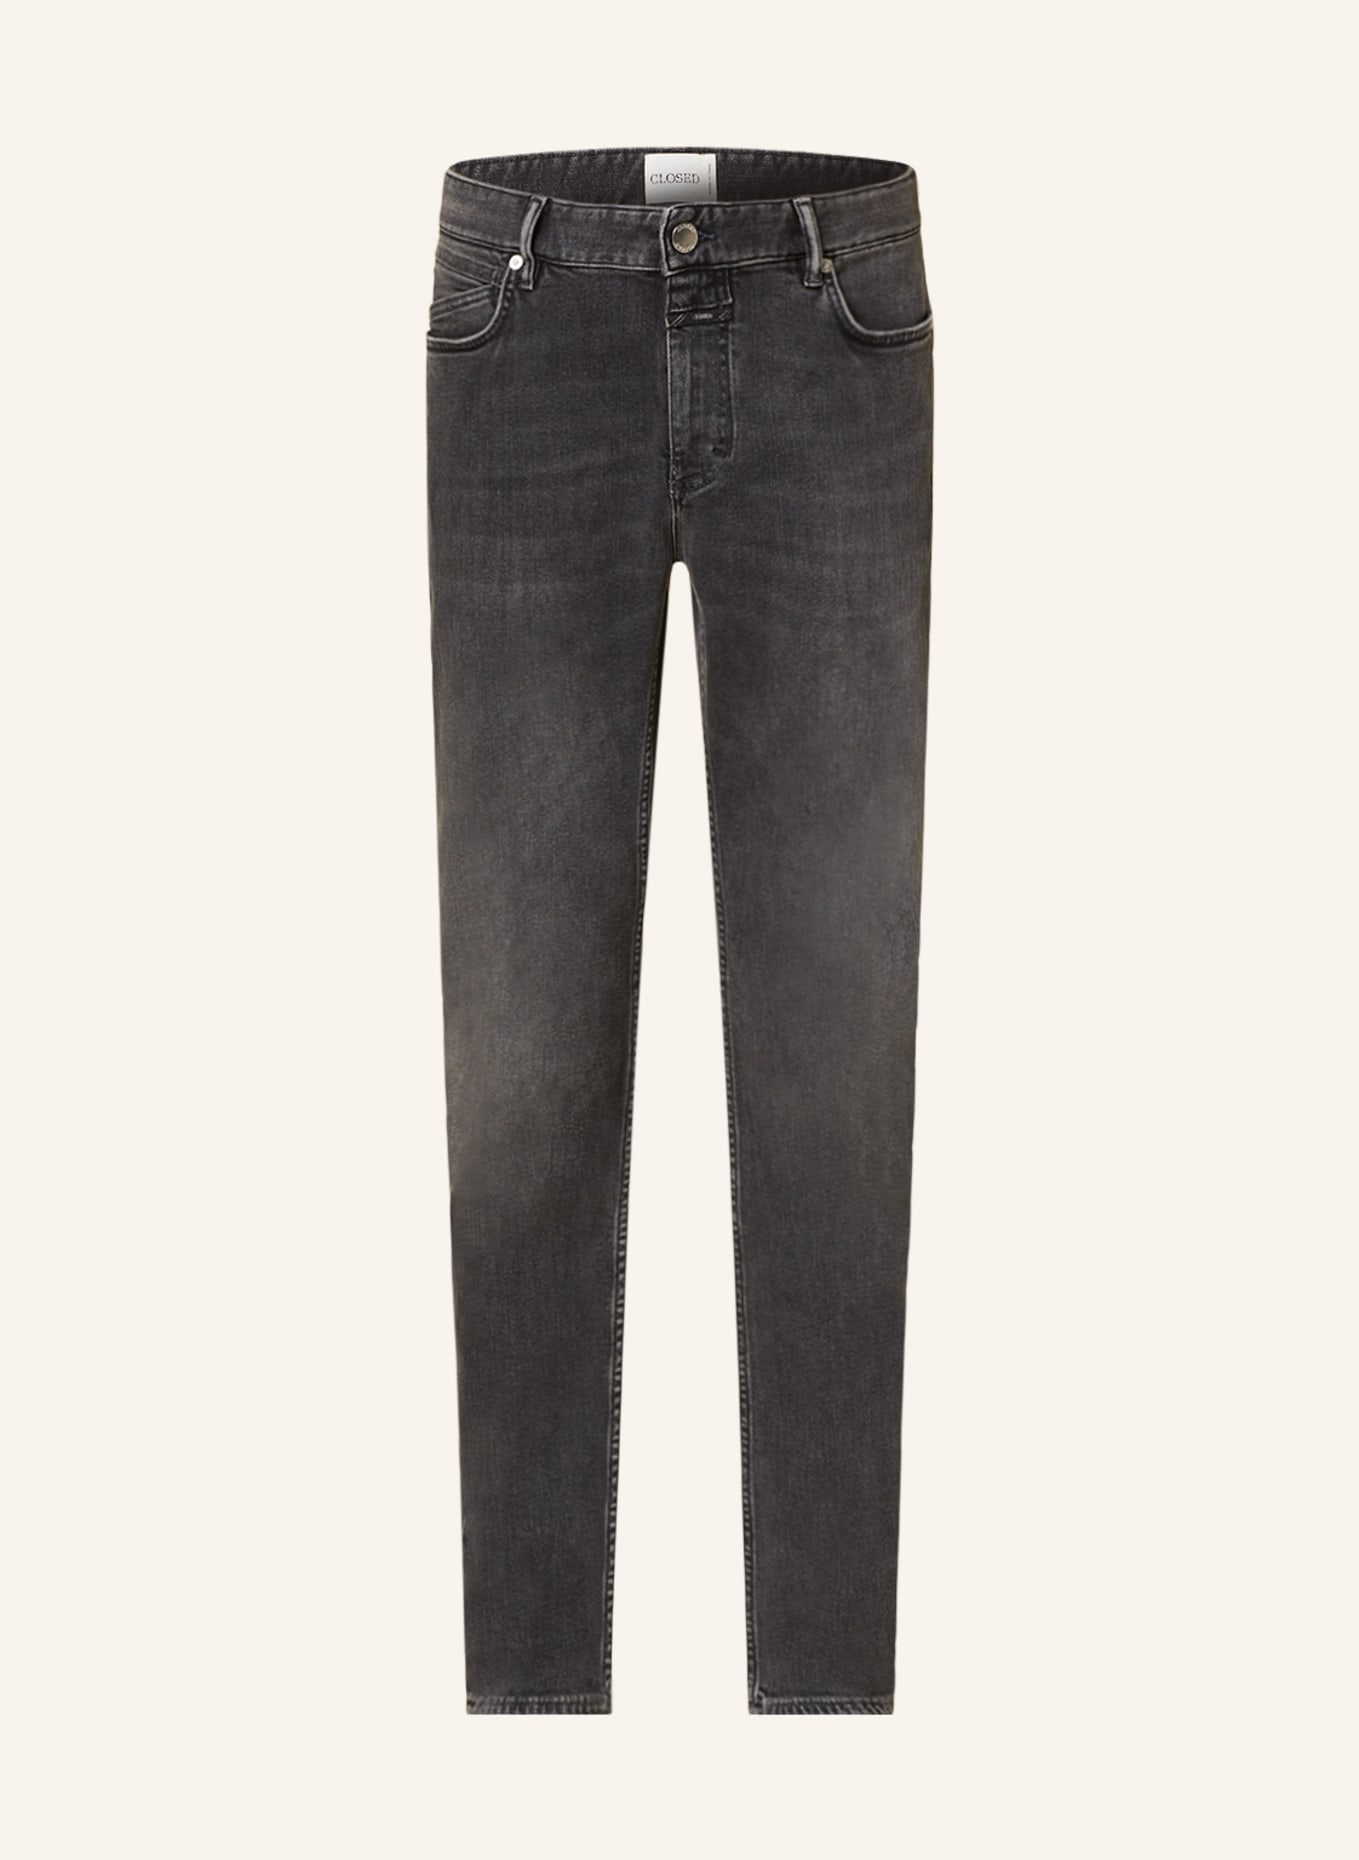 CLOSED Jeans UNITY Slim Fit, Farbe: DGY DARK GREY (Bild 1)